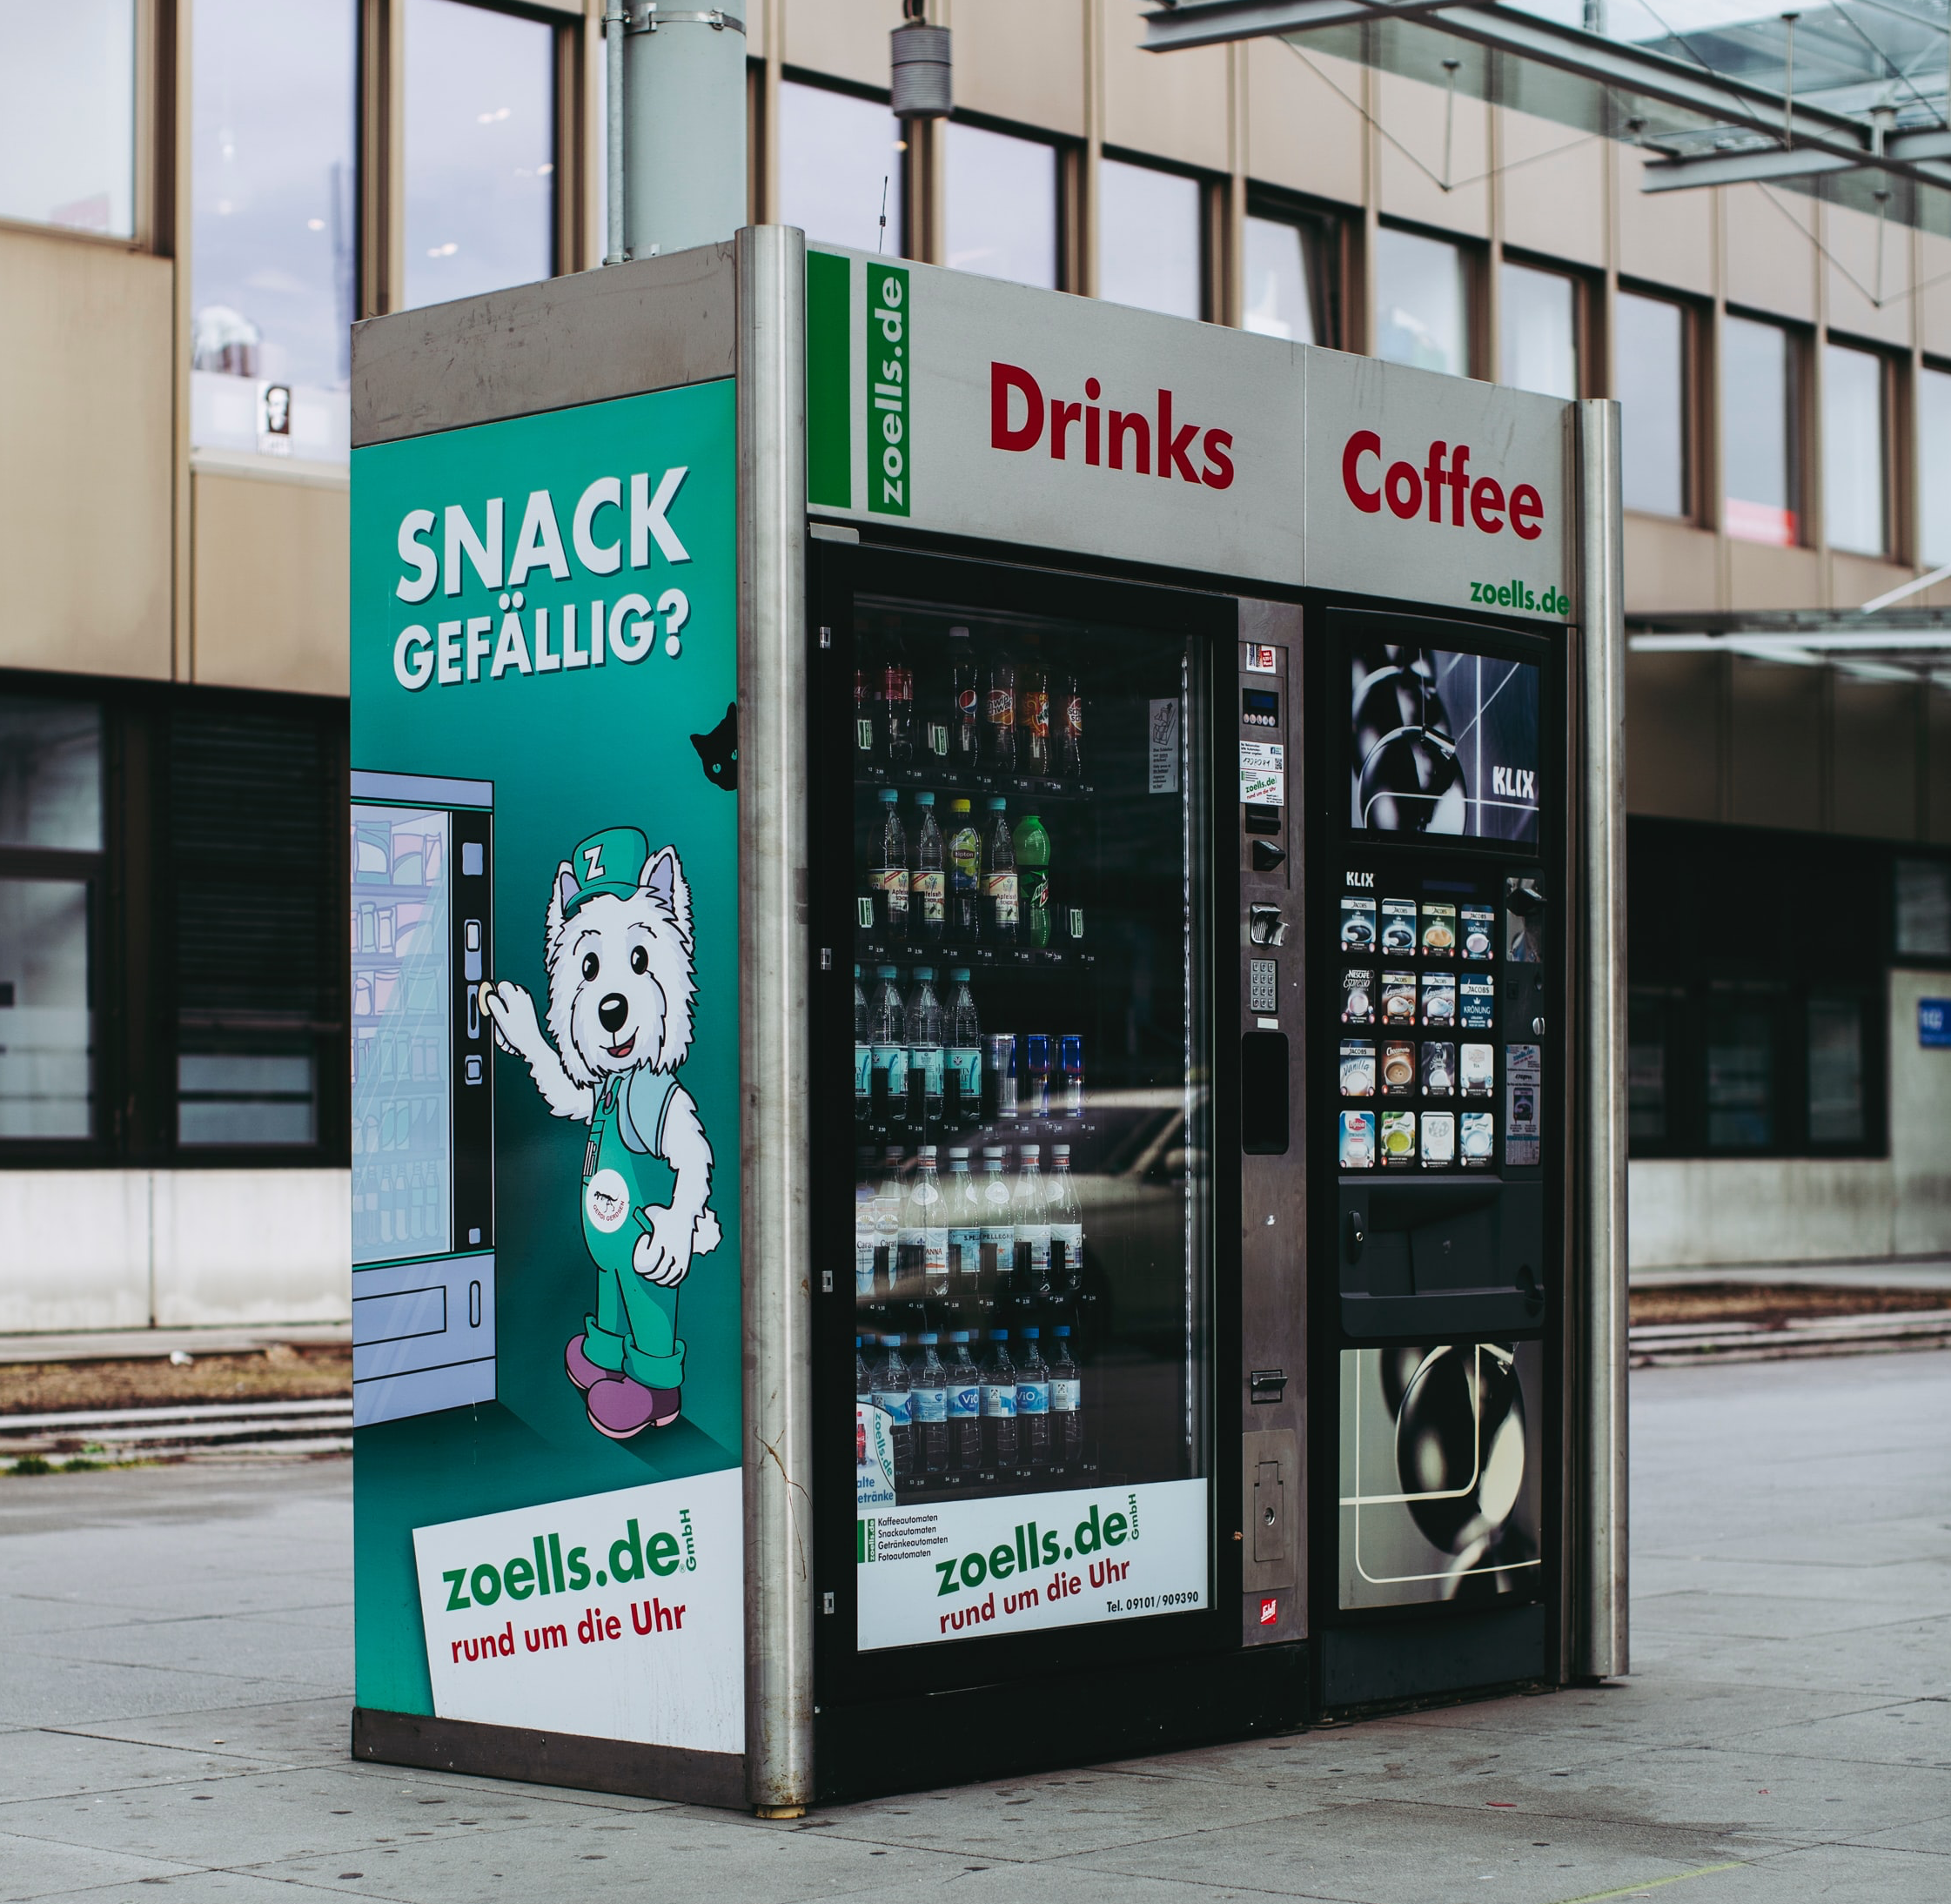 Why Kubernetes should be like a vending machine